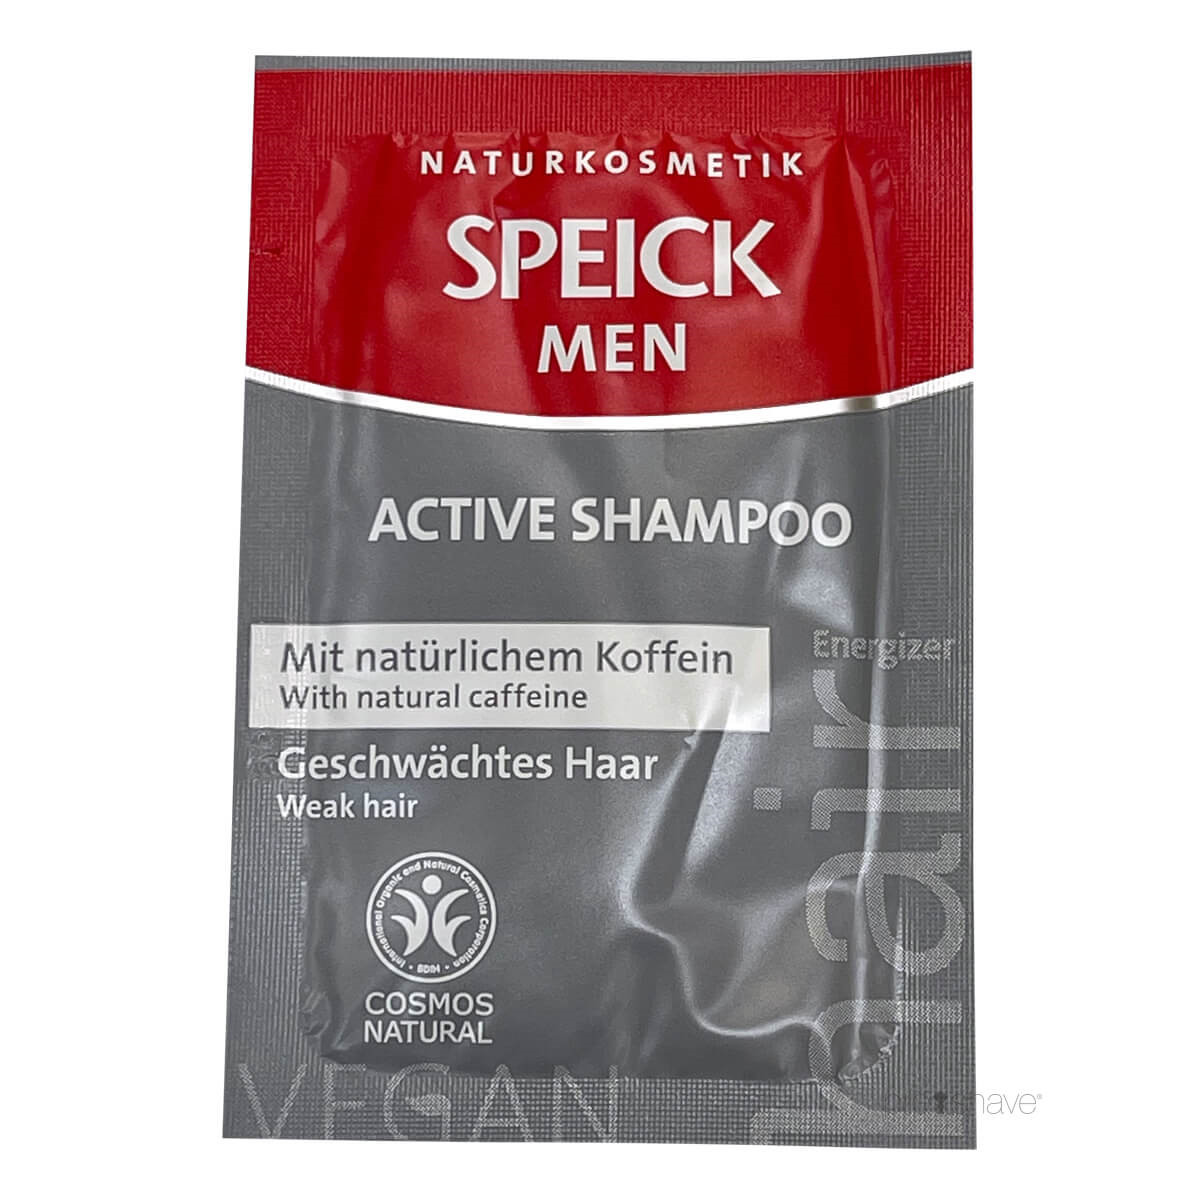 Speick Men Active Shampoo, Sample, 6 ml.